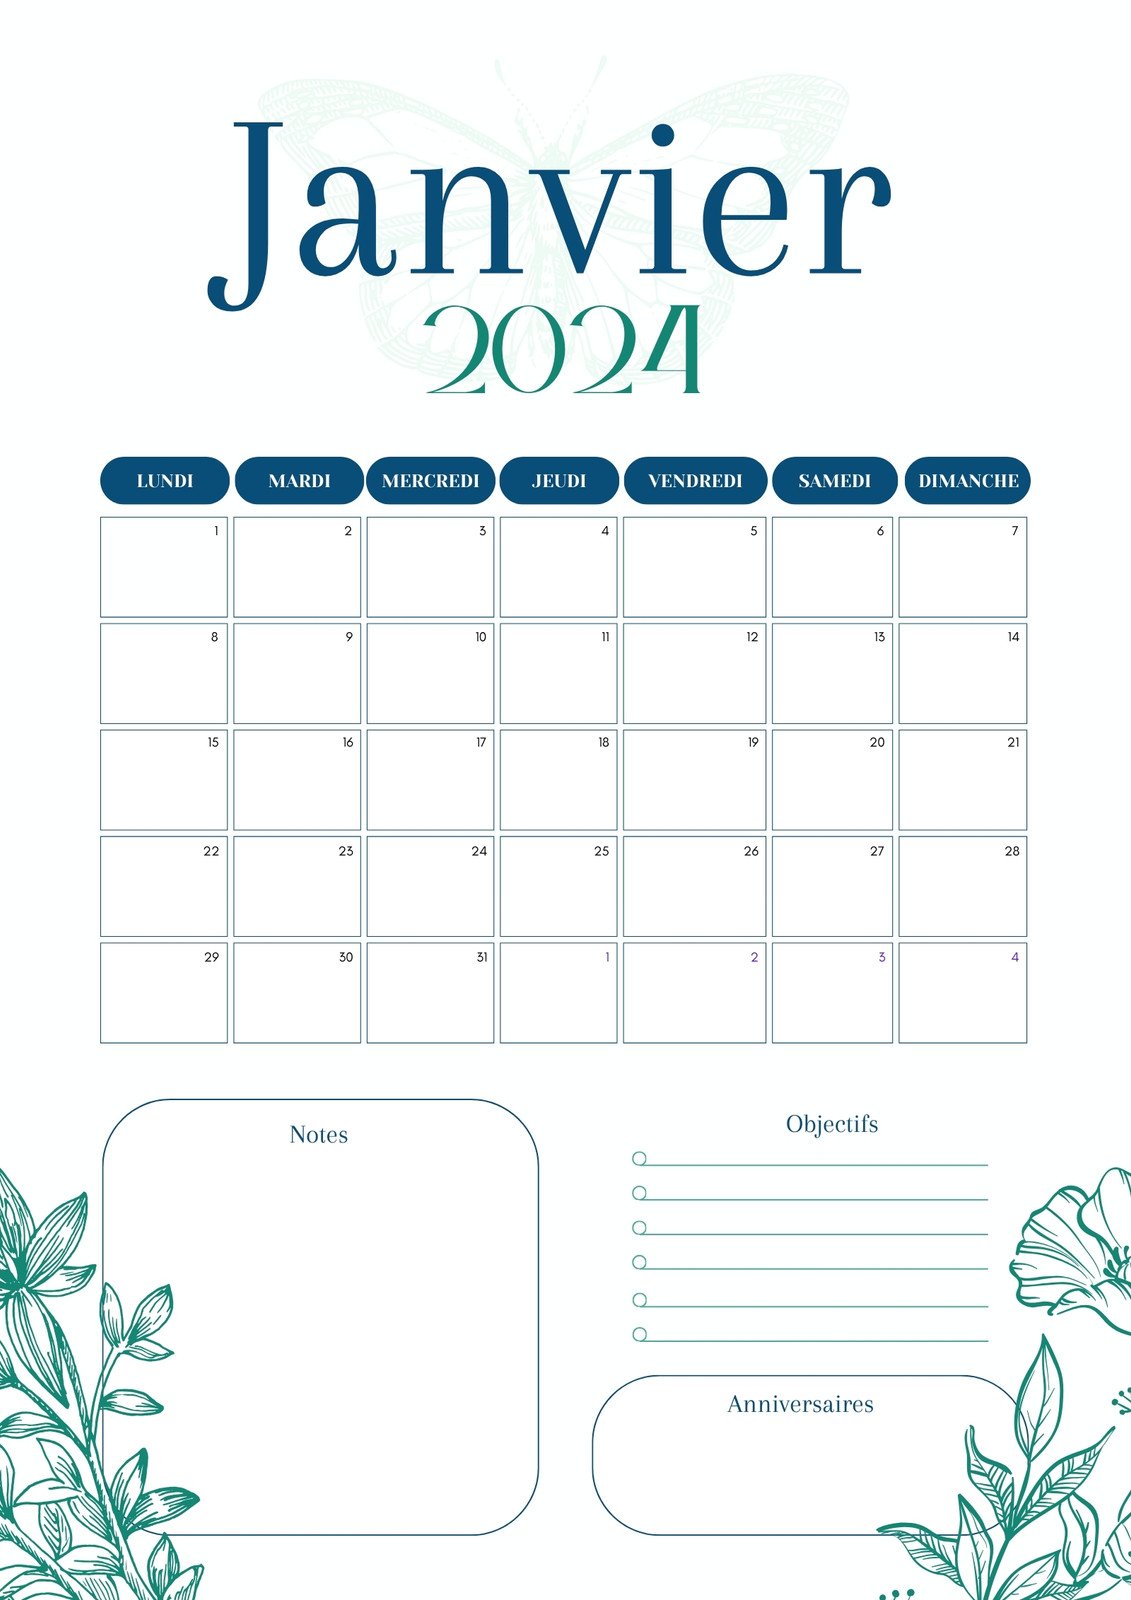 Grand calendrier mensuel famille organisée (édition 2024